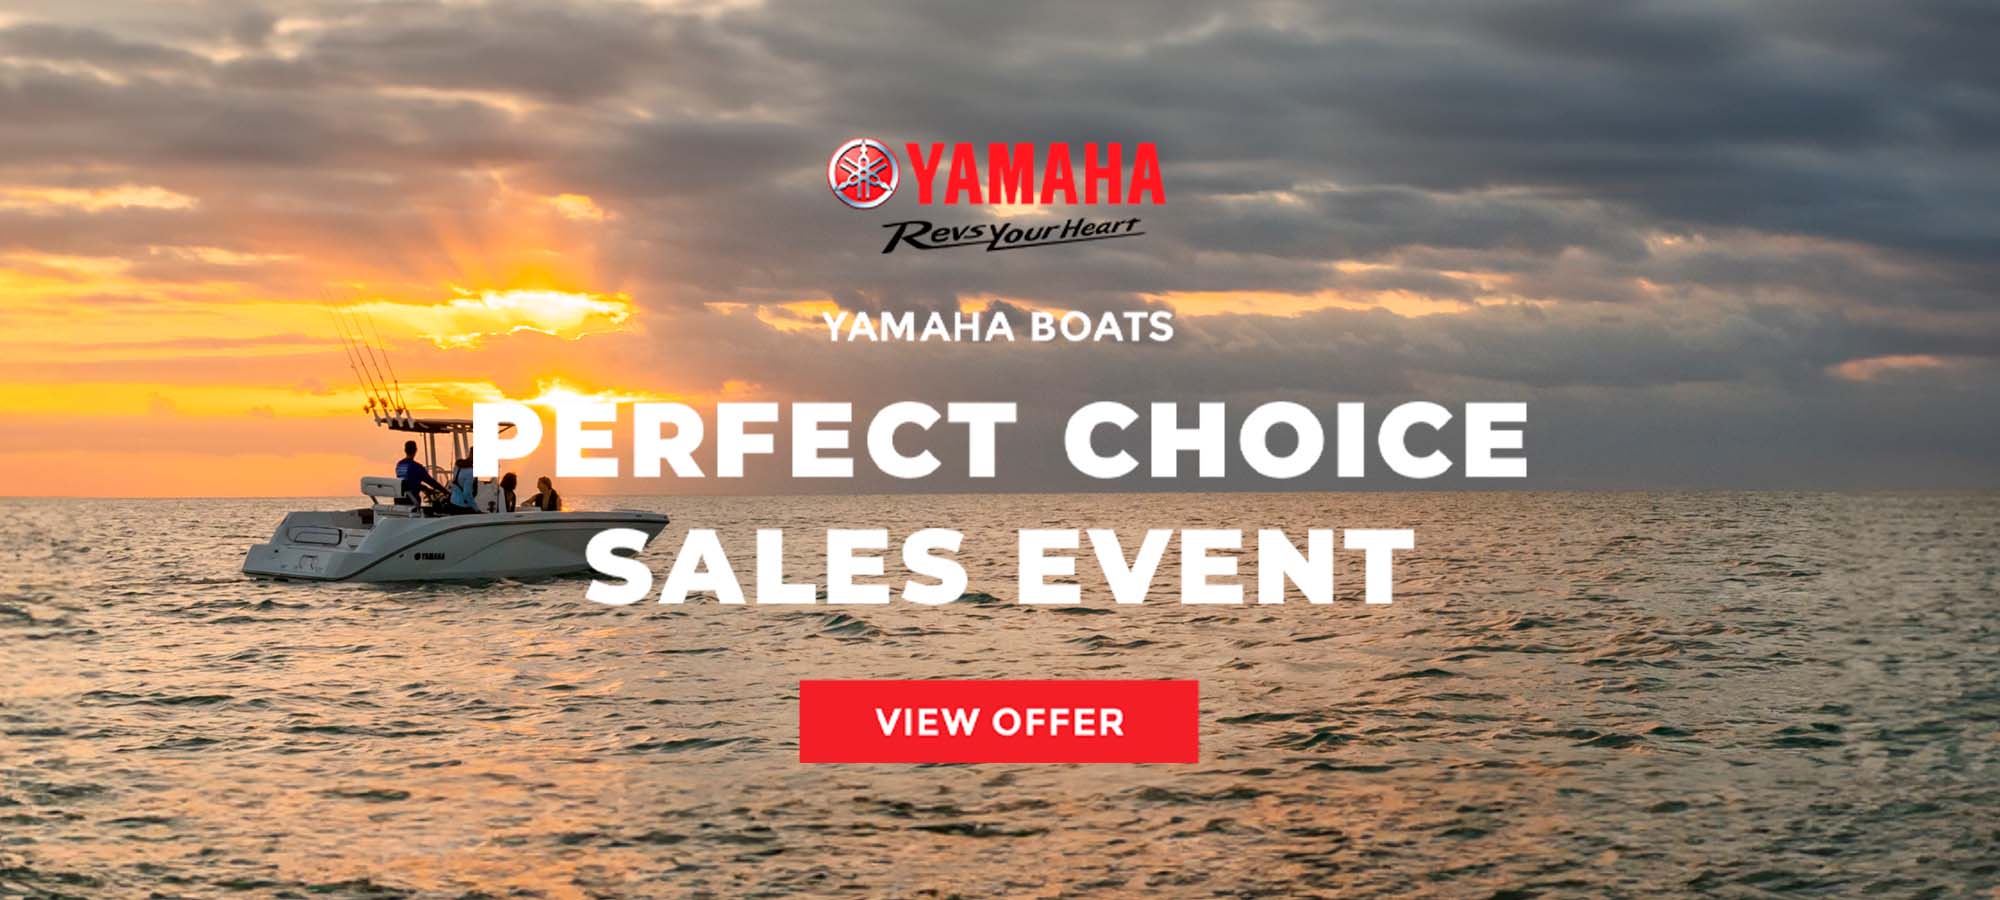 Yamaha US - Boats - PERFECT CHOICE SALES EVENT at Sunrise Marine & Motorsports